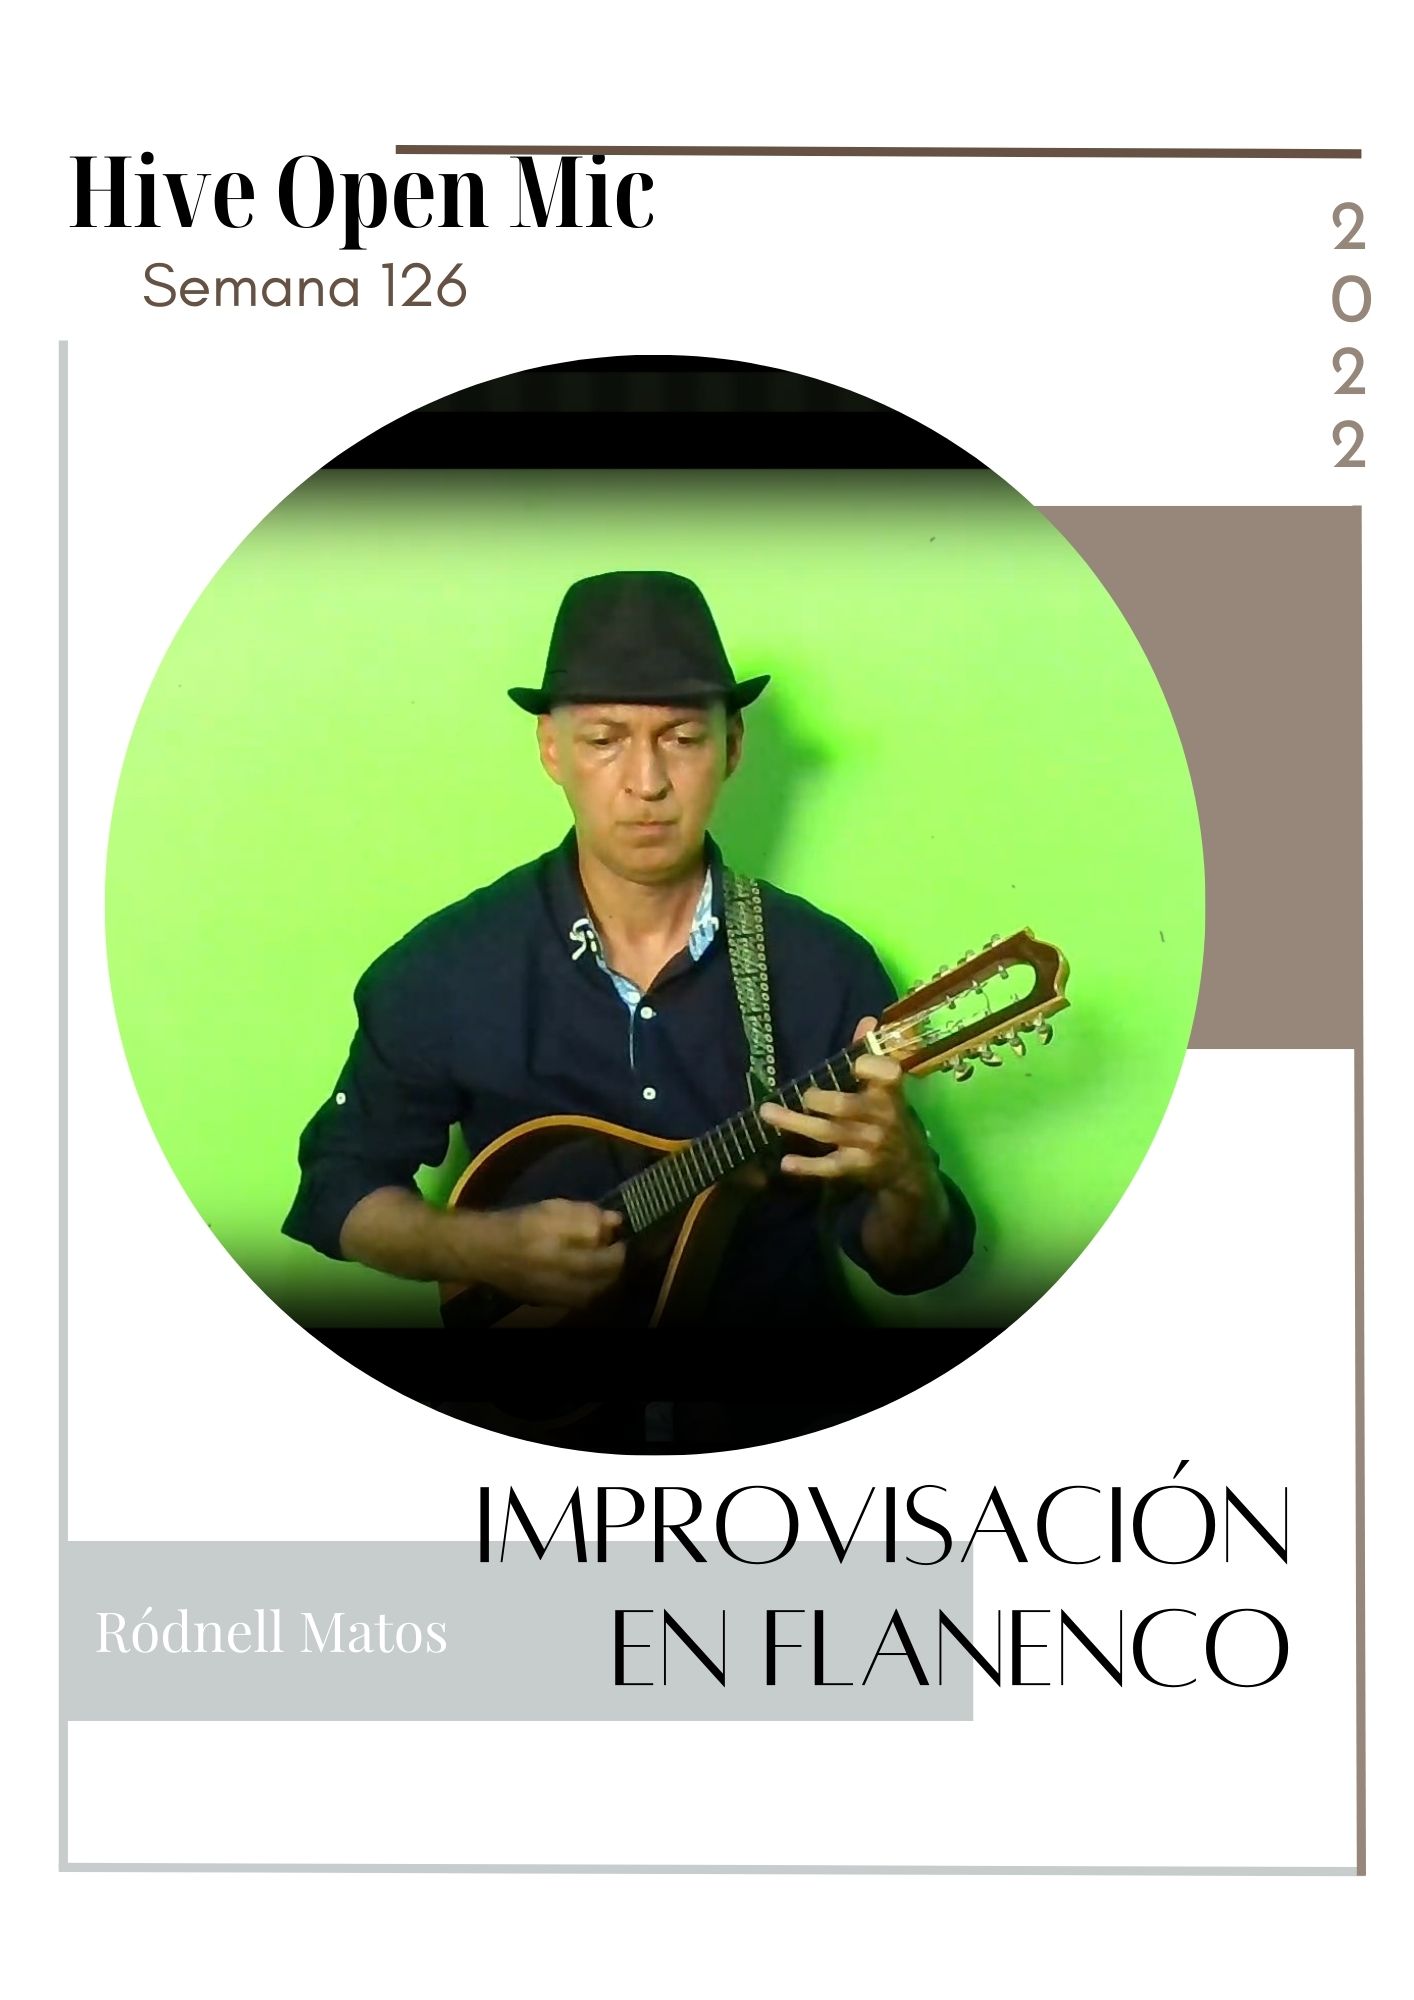 Impro_Flamenco.jpg